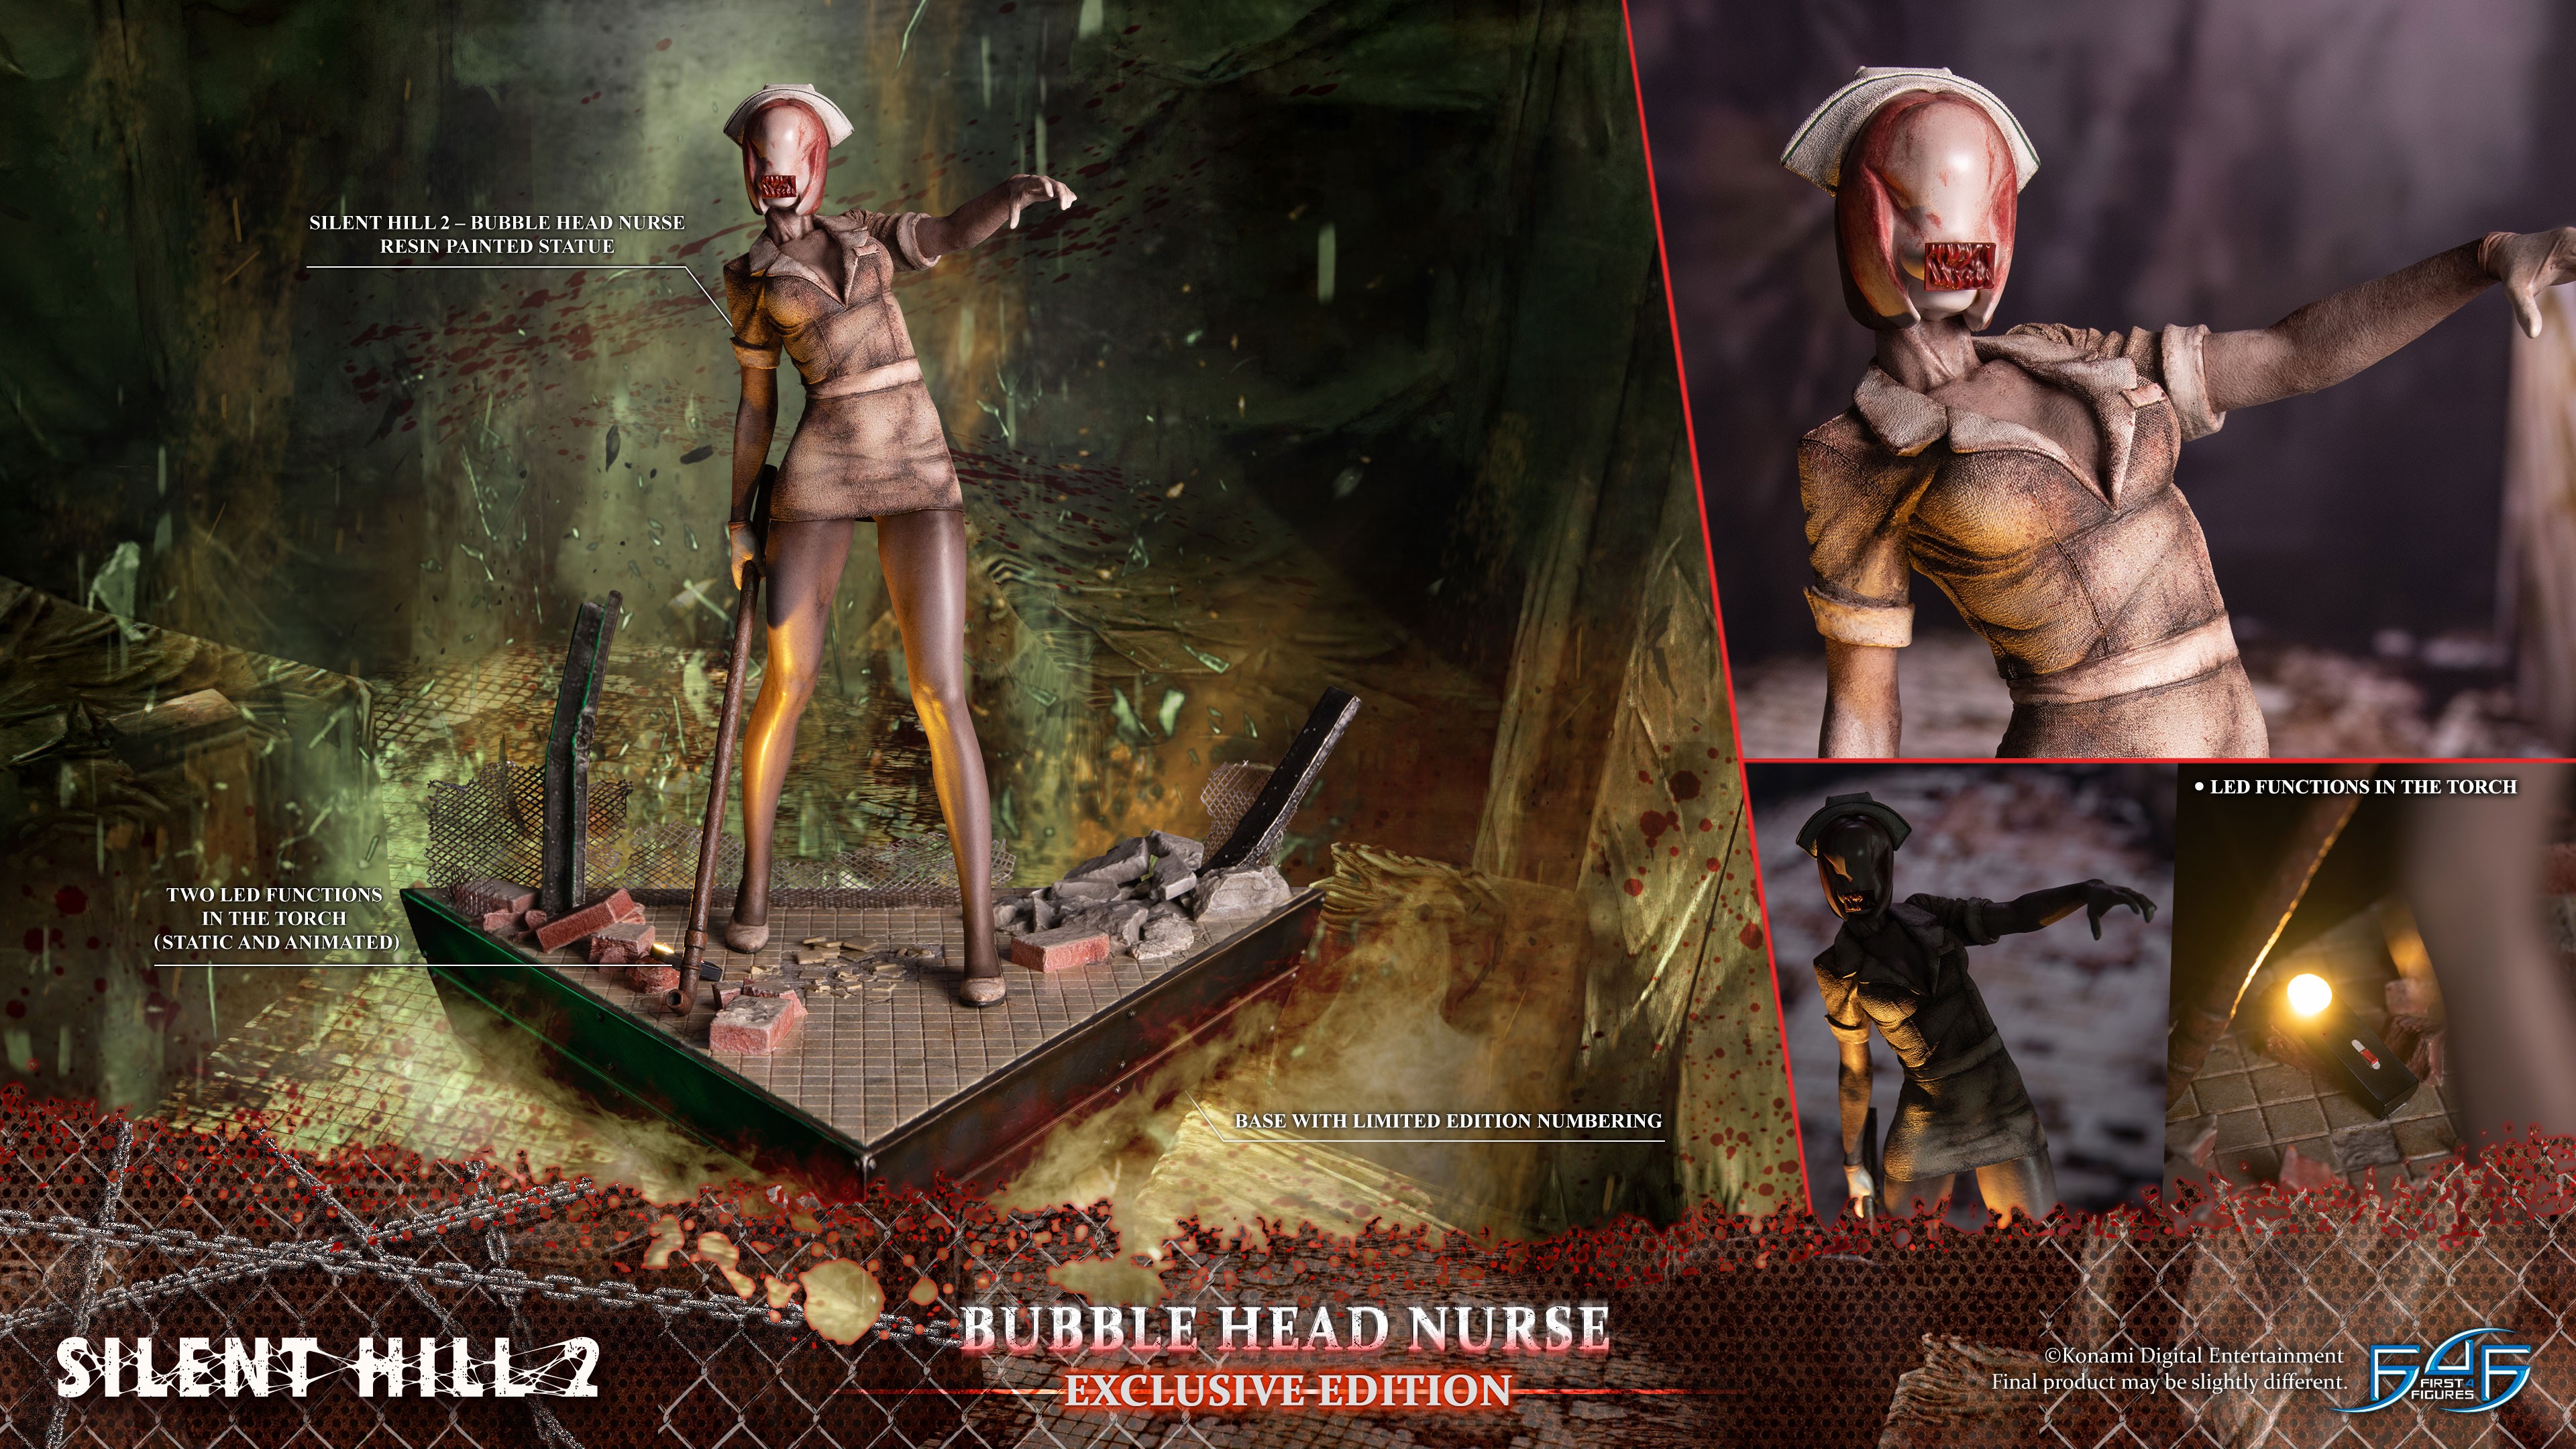 Silent Hill Bubble Head Nurse Exclusive Edition